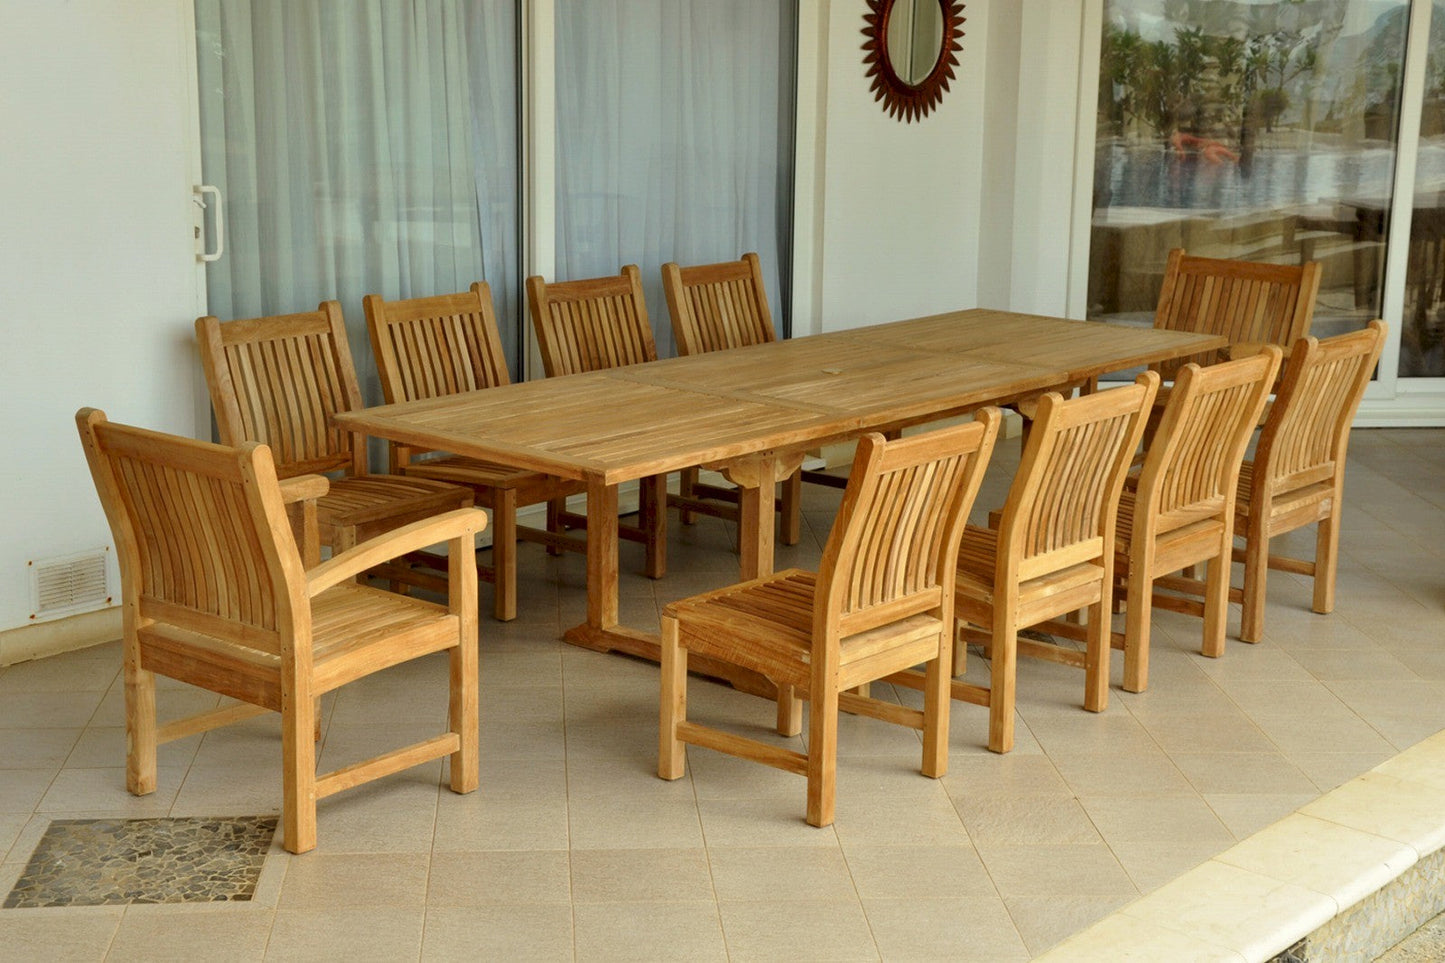 SET-89 Bahama Sahara 11-pc Dining Table Set